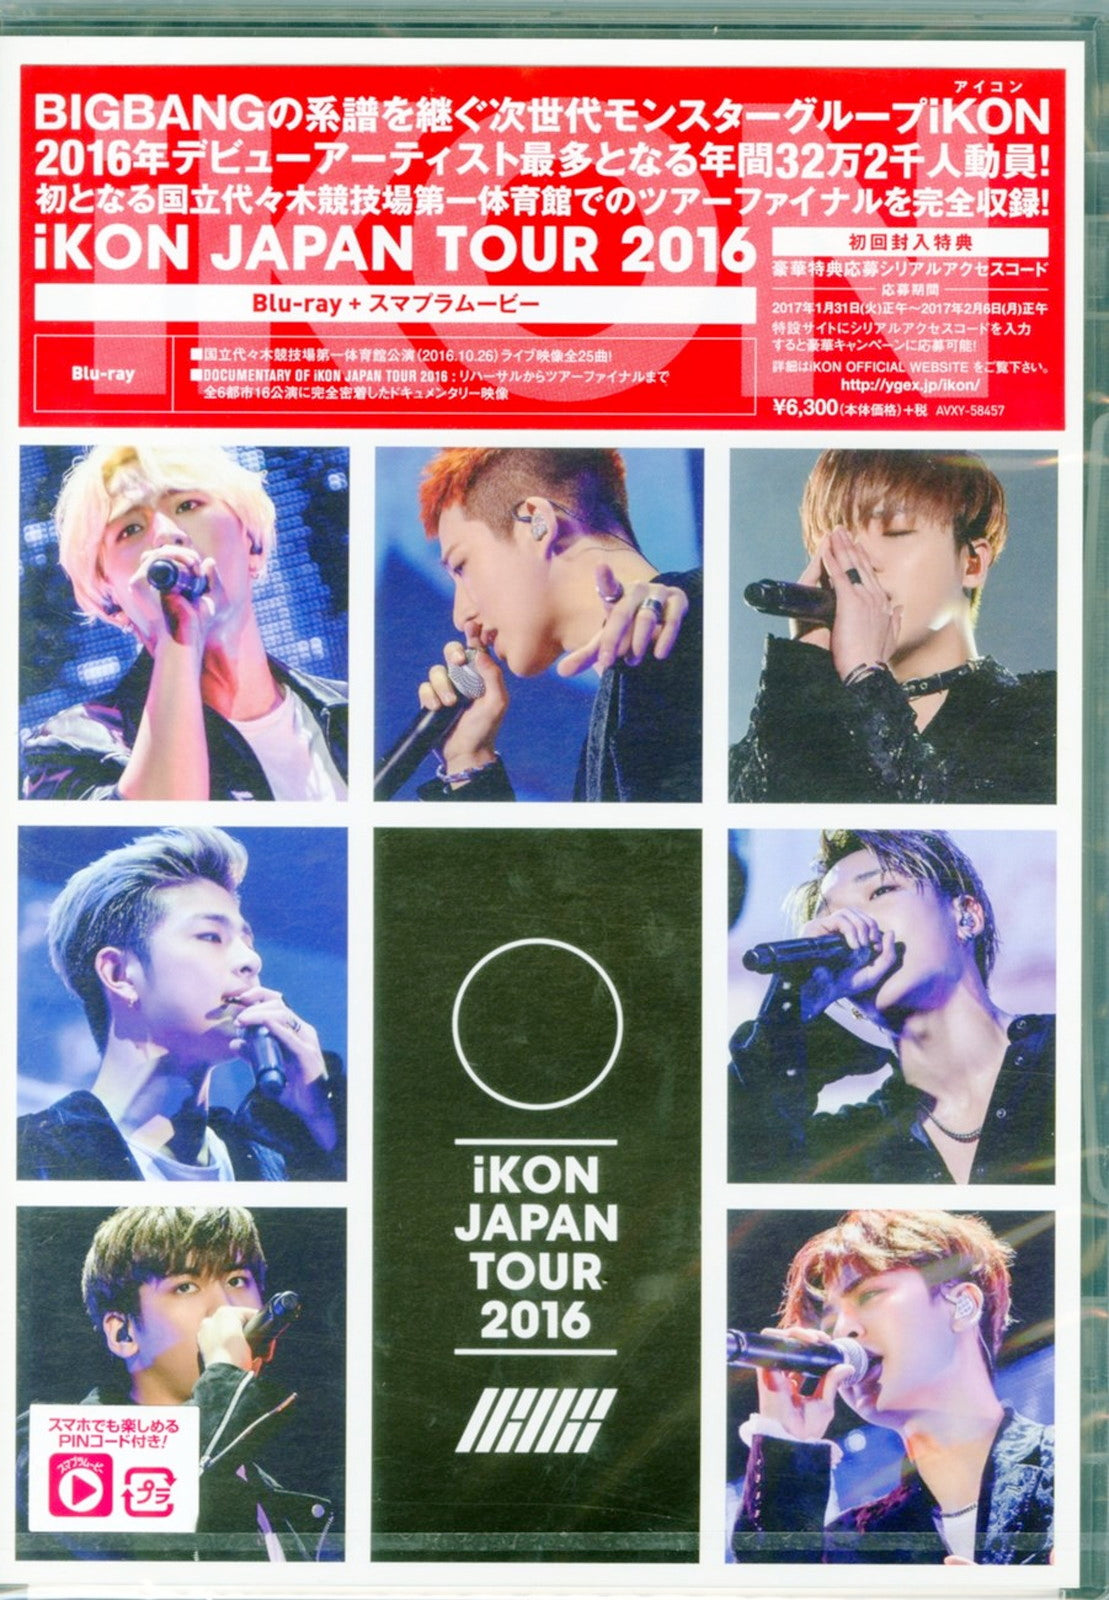 Ikon - Ikon Japan Tour 2016 – CDs Vinyl Japan Store Blu-ray